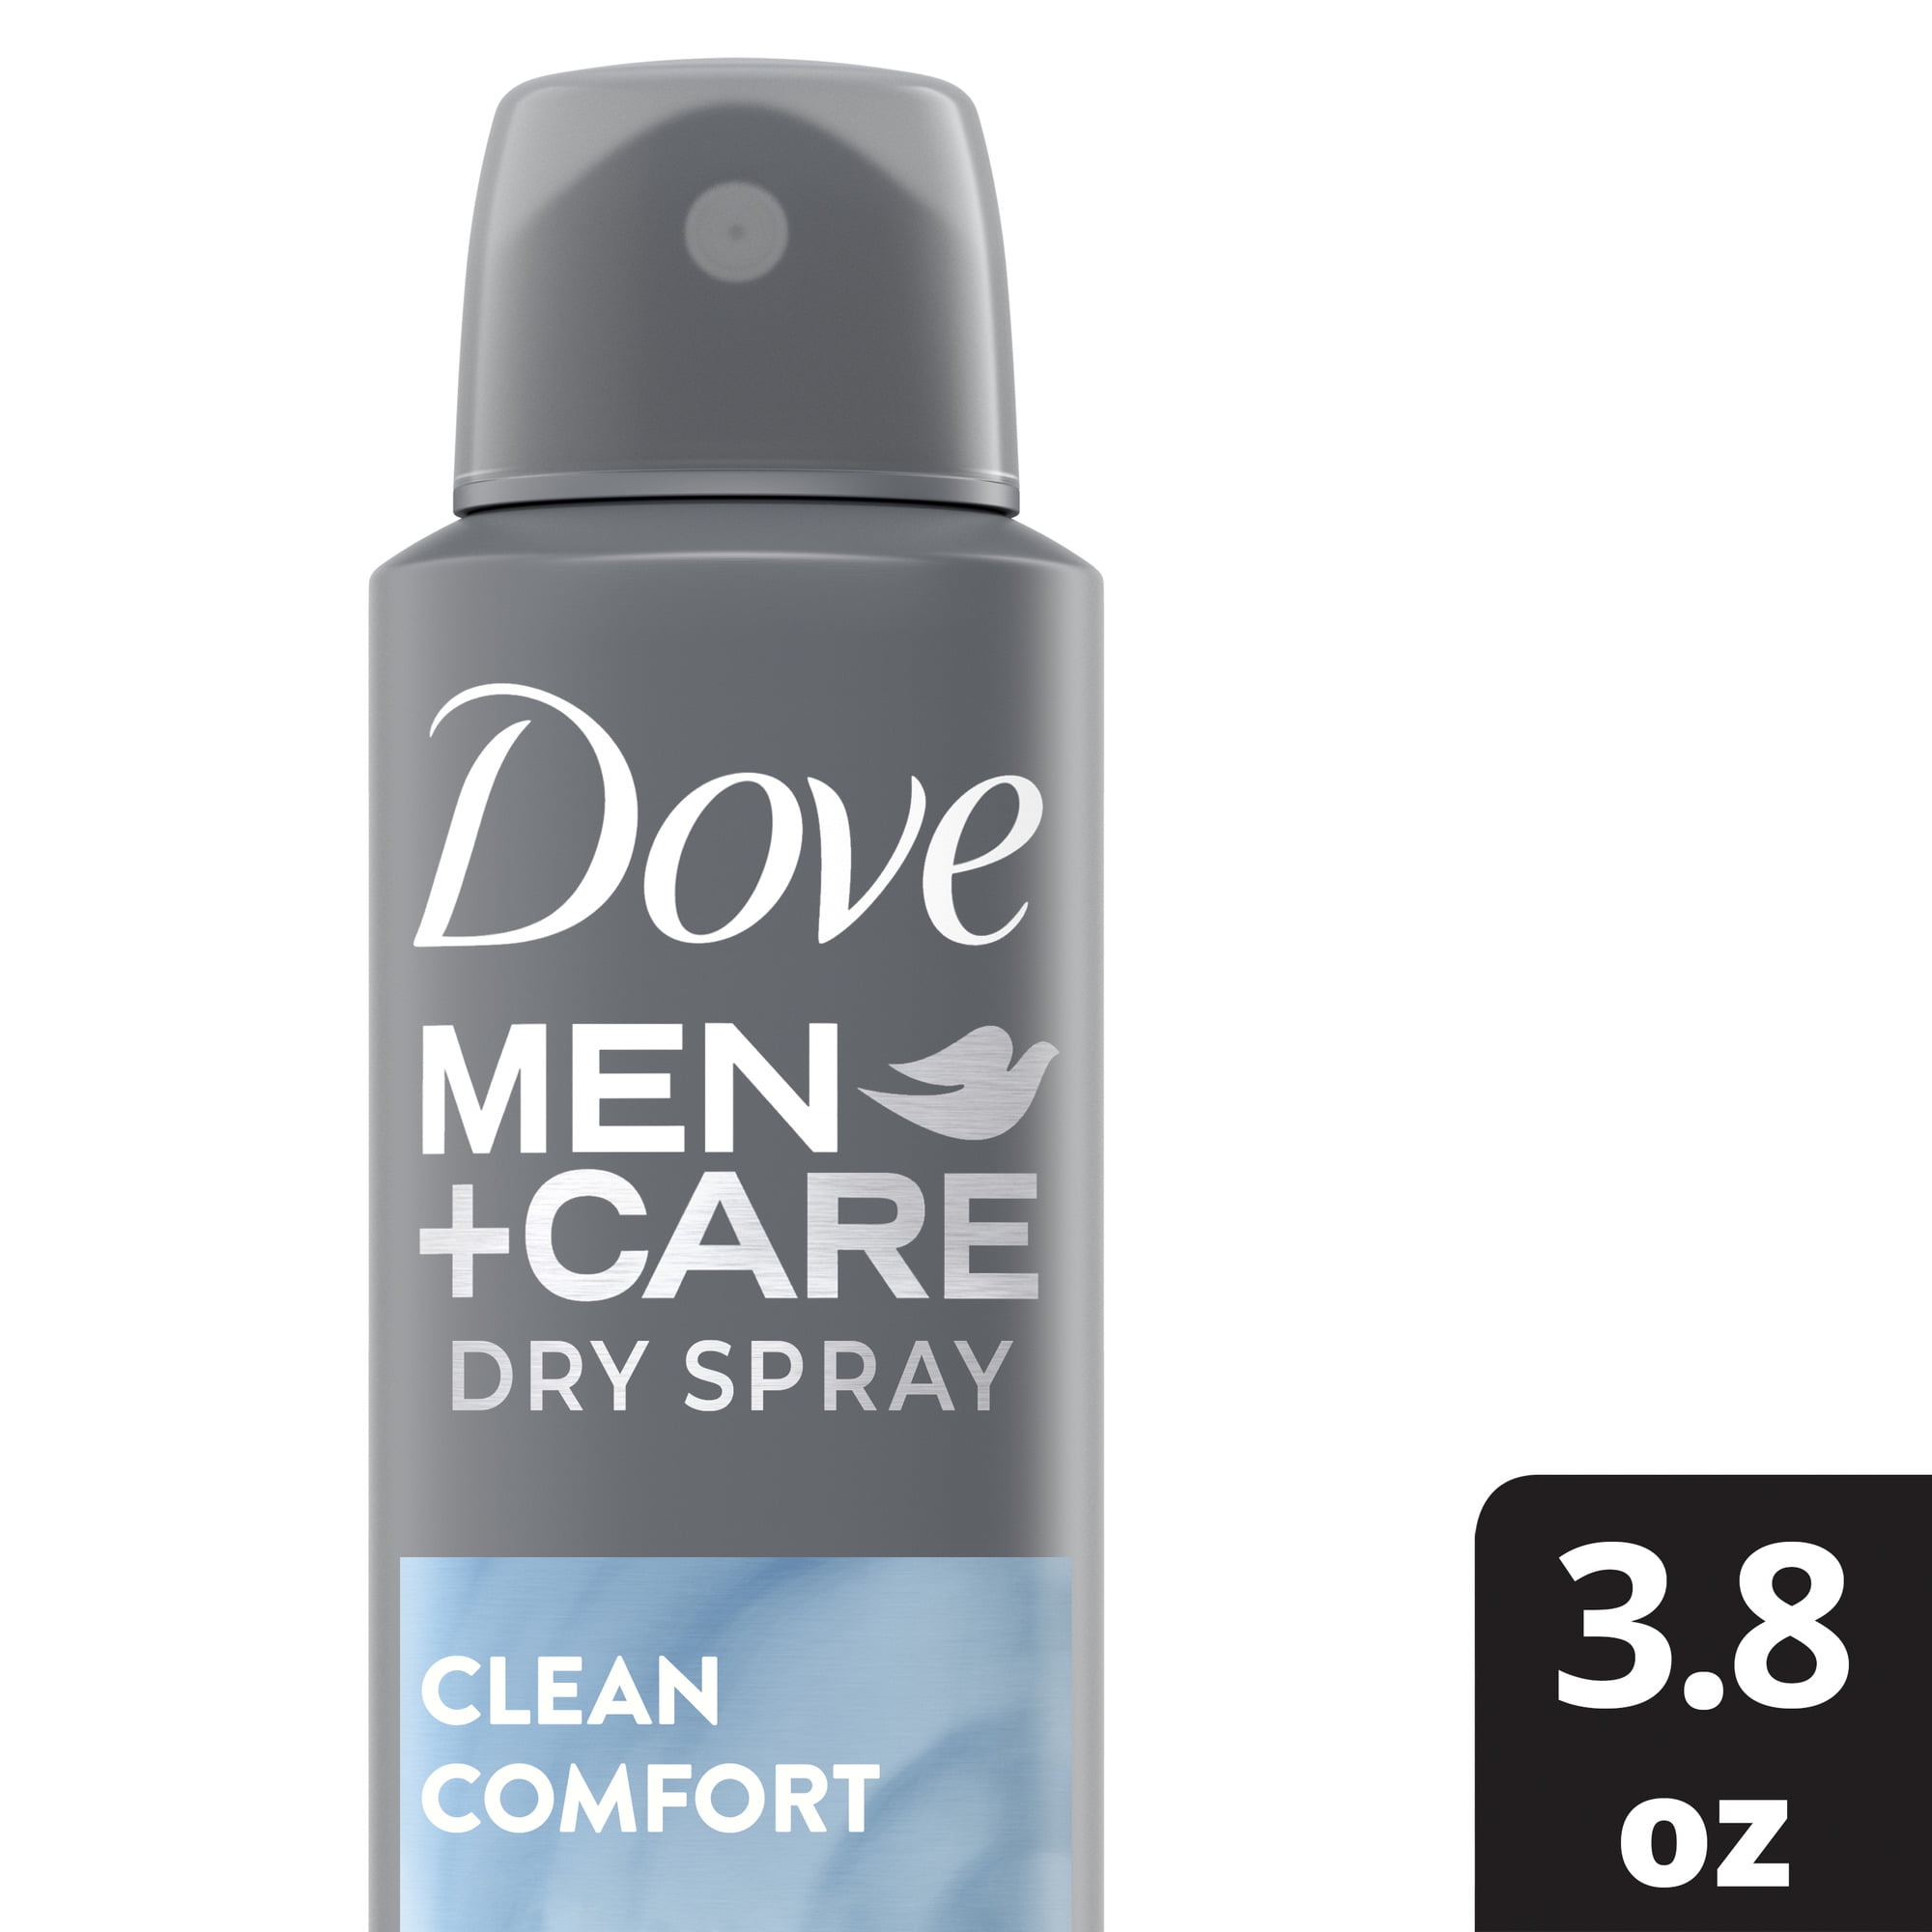 Degree Men Advanced Antiperspirant Dry Spray Sweat and Odor Protection Adventure Deodorant For Men With MotionSense 3.8 oz Walmart.com